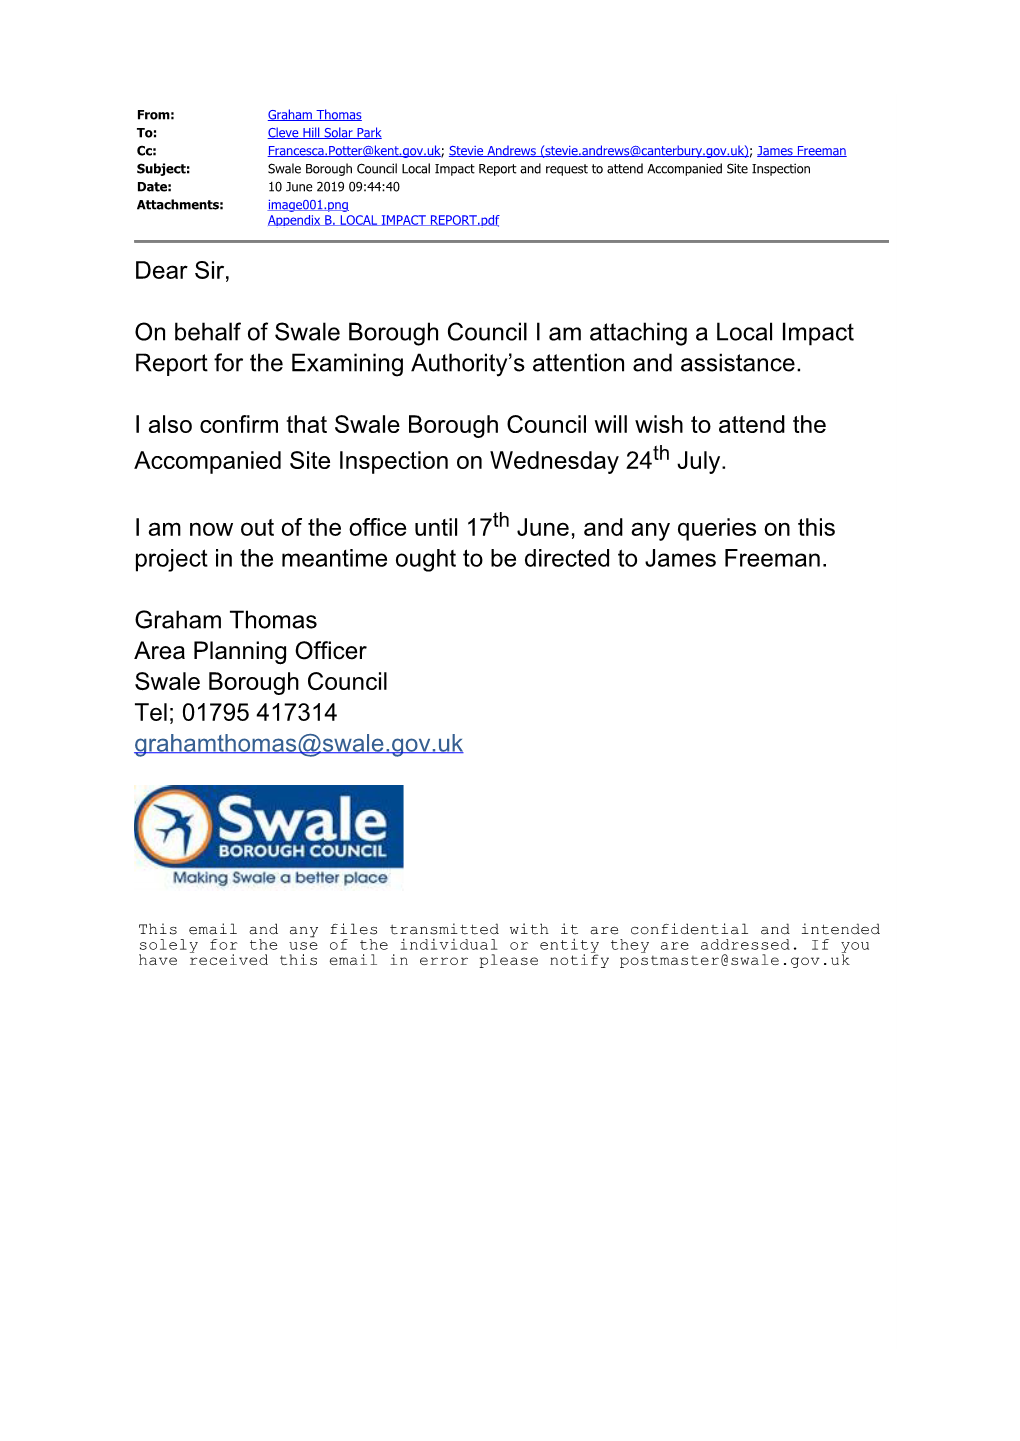 Dear Sir, on Behalf of Swale Borough Council I Am Attaching a Local